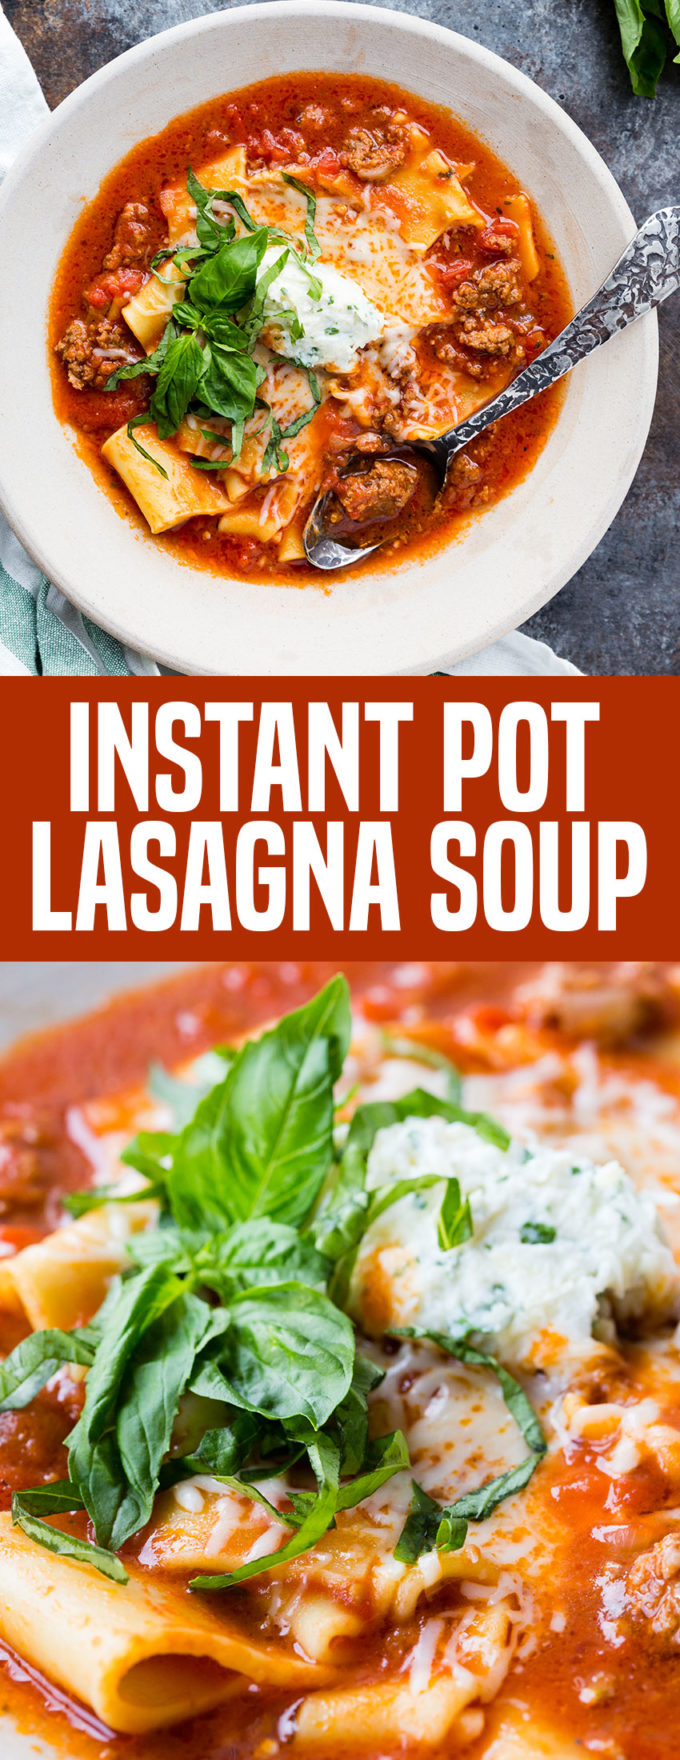 Easy to make instant pot lasagna soup, a flavorful and easy to make one pot lasagna soup